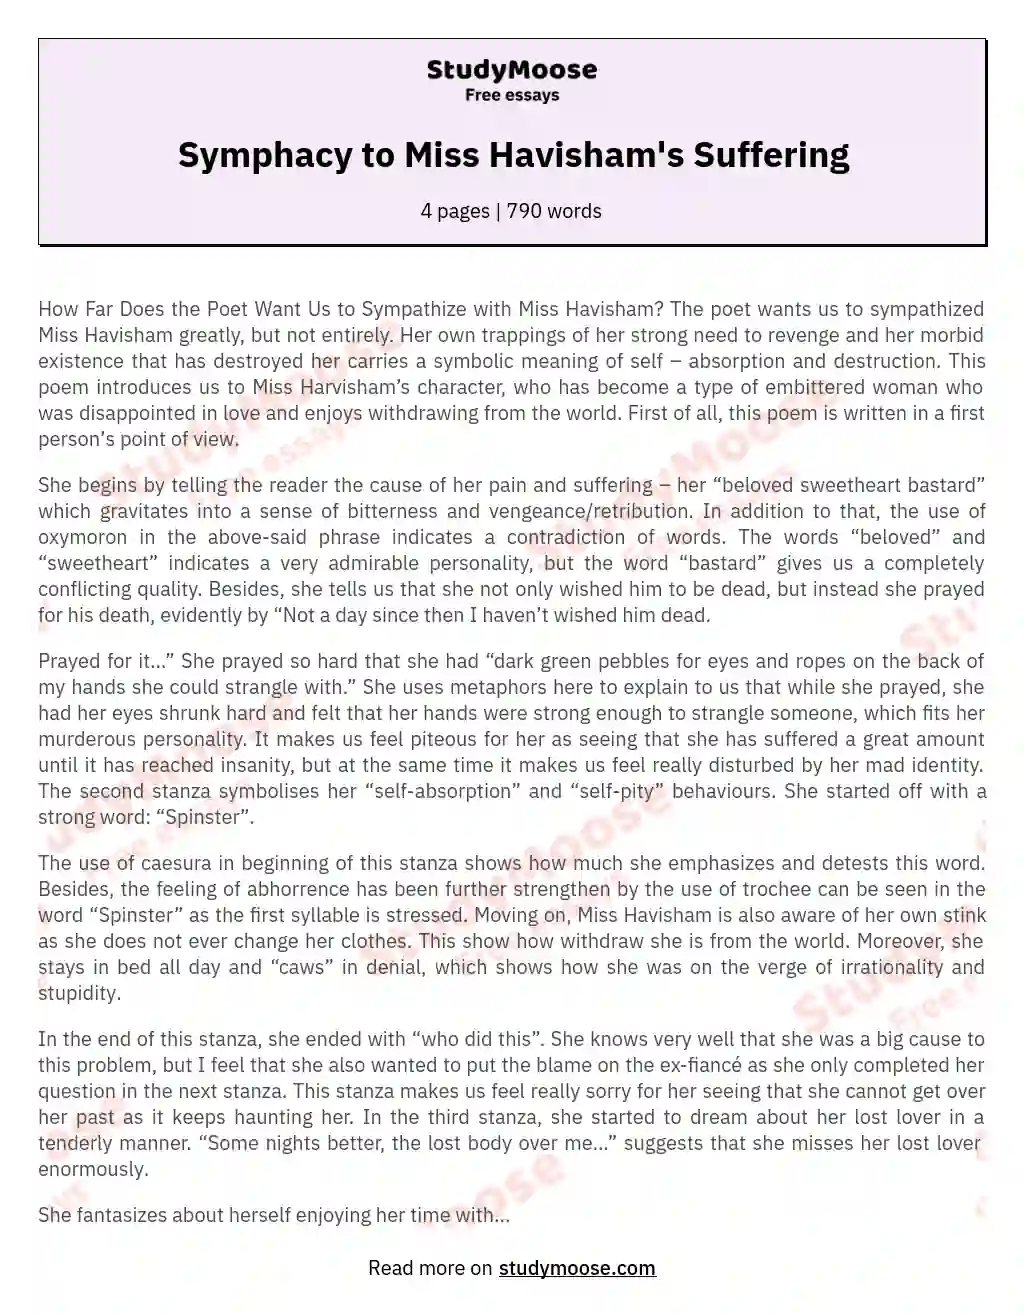 Symphacy to Miss Havisham's Suffering essay